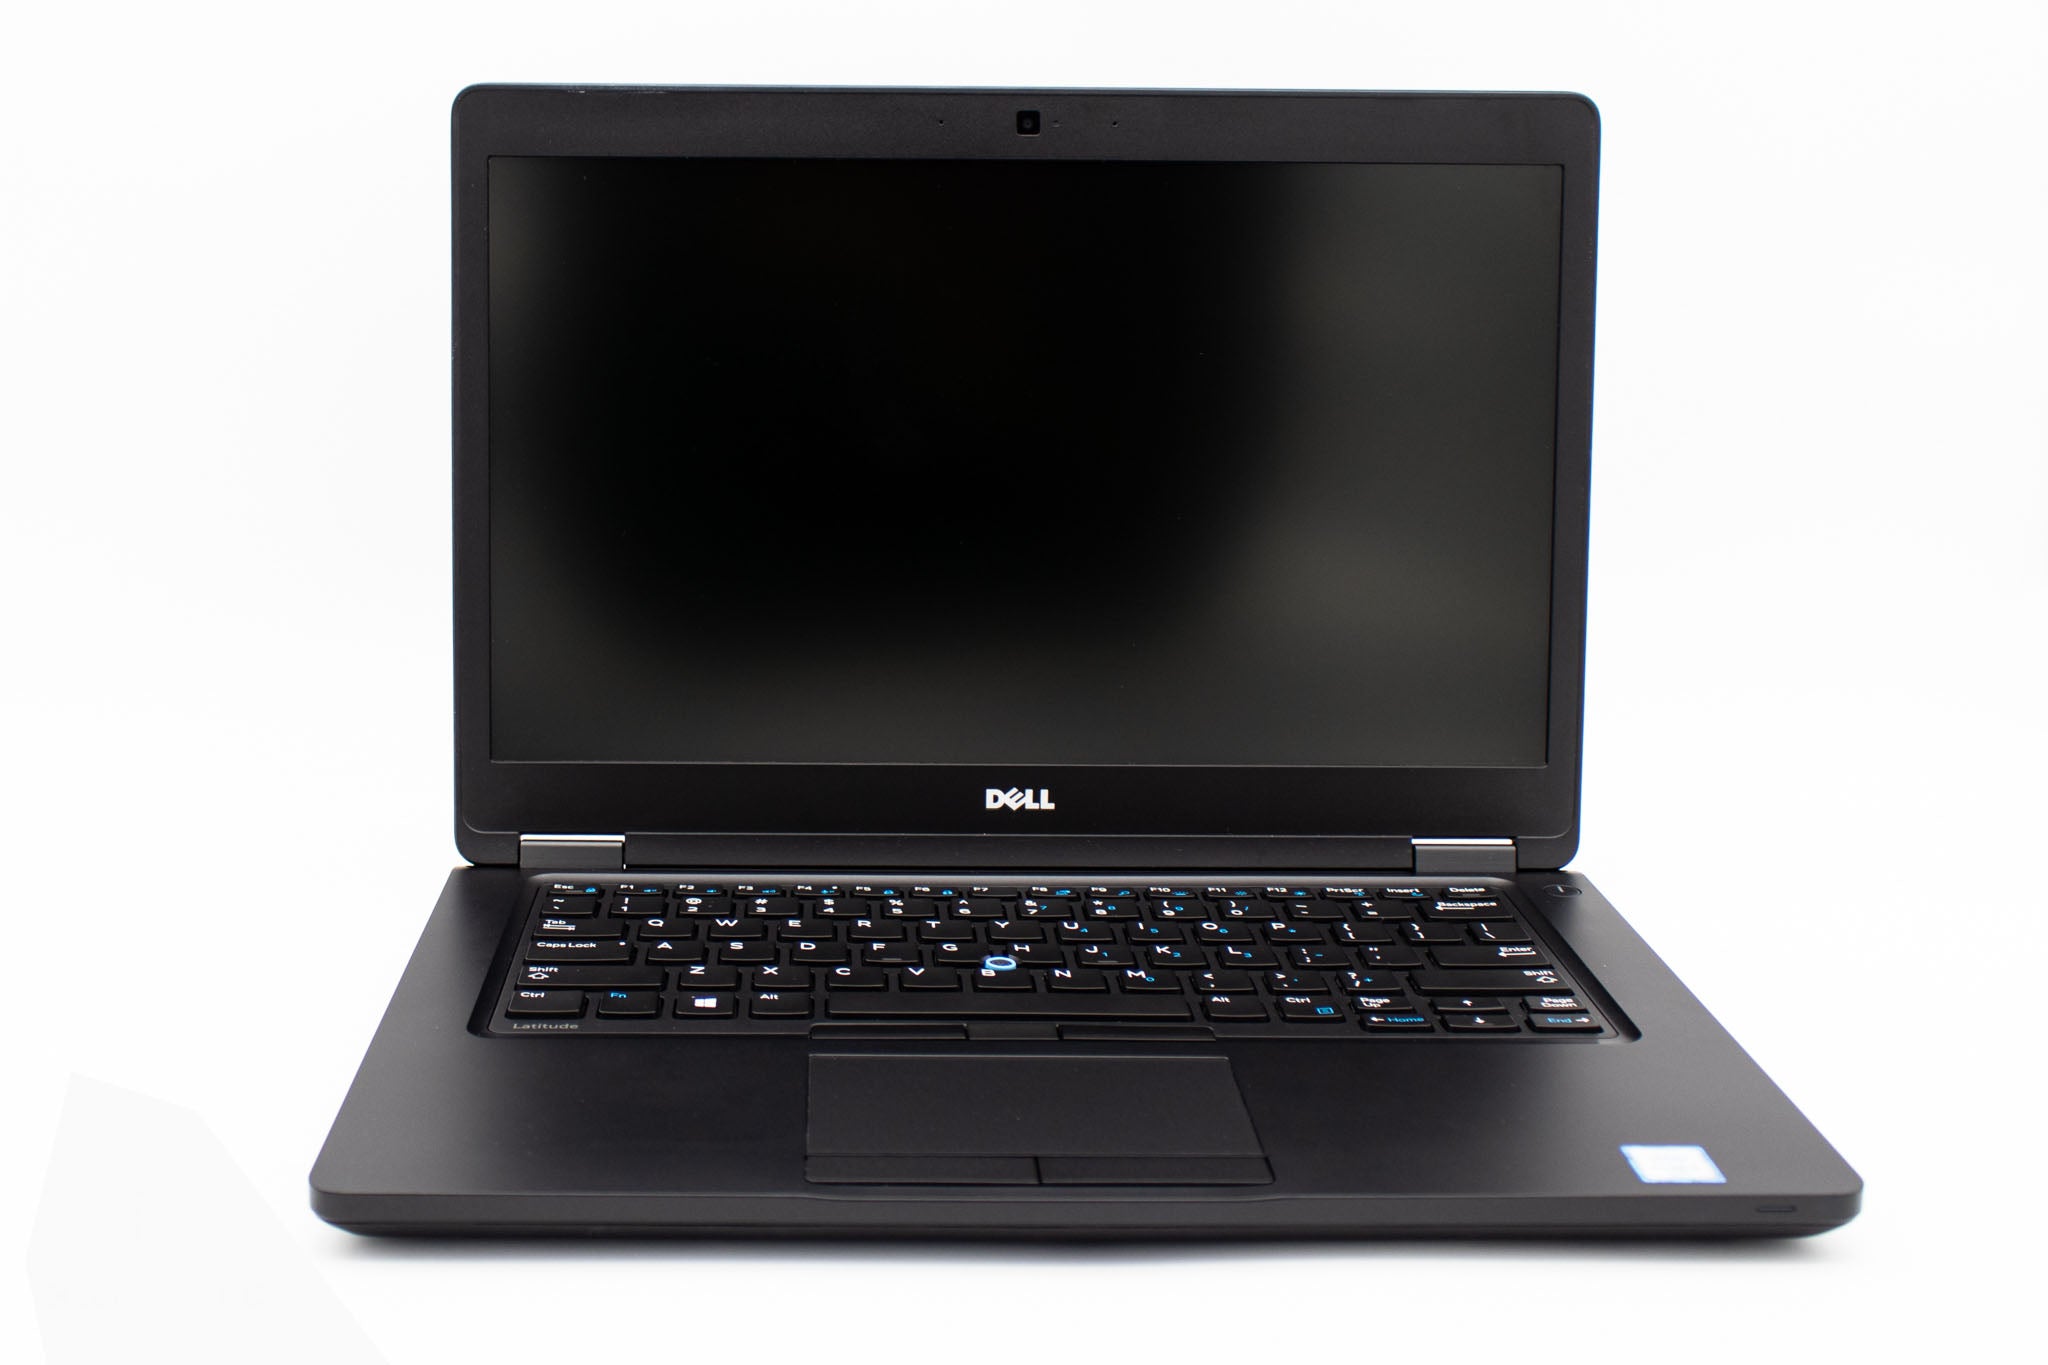 Refurbished Dell Latitude E5480 Laptop Computer, Intel Core i5, 128GB Solid State Hard Drive, 8GB Ram, Windows 10 Operating System